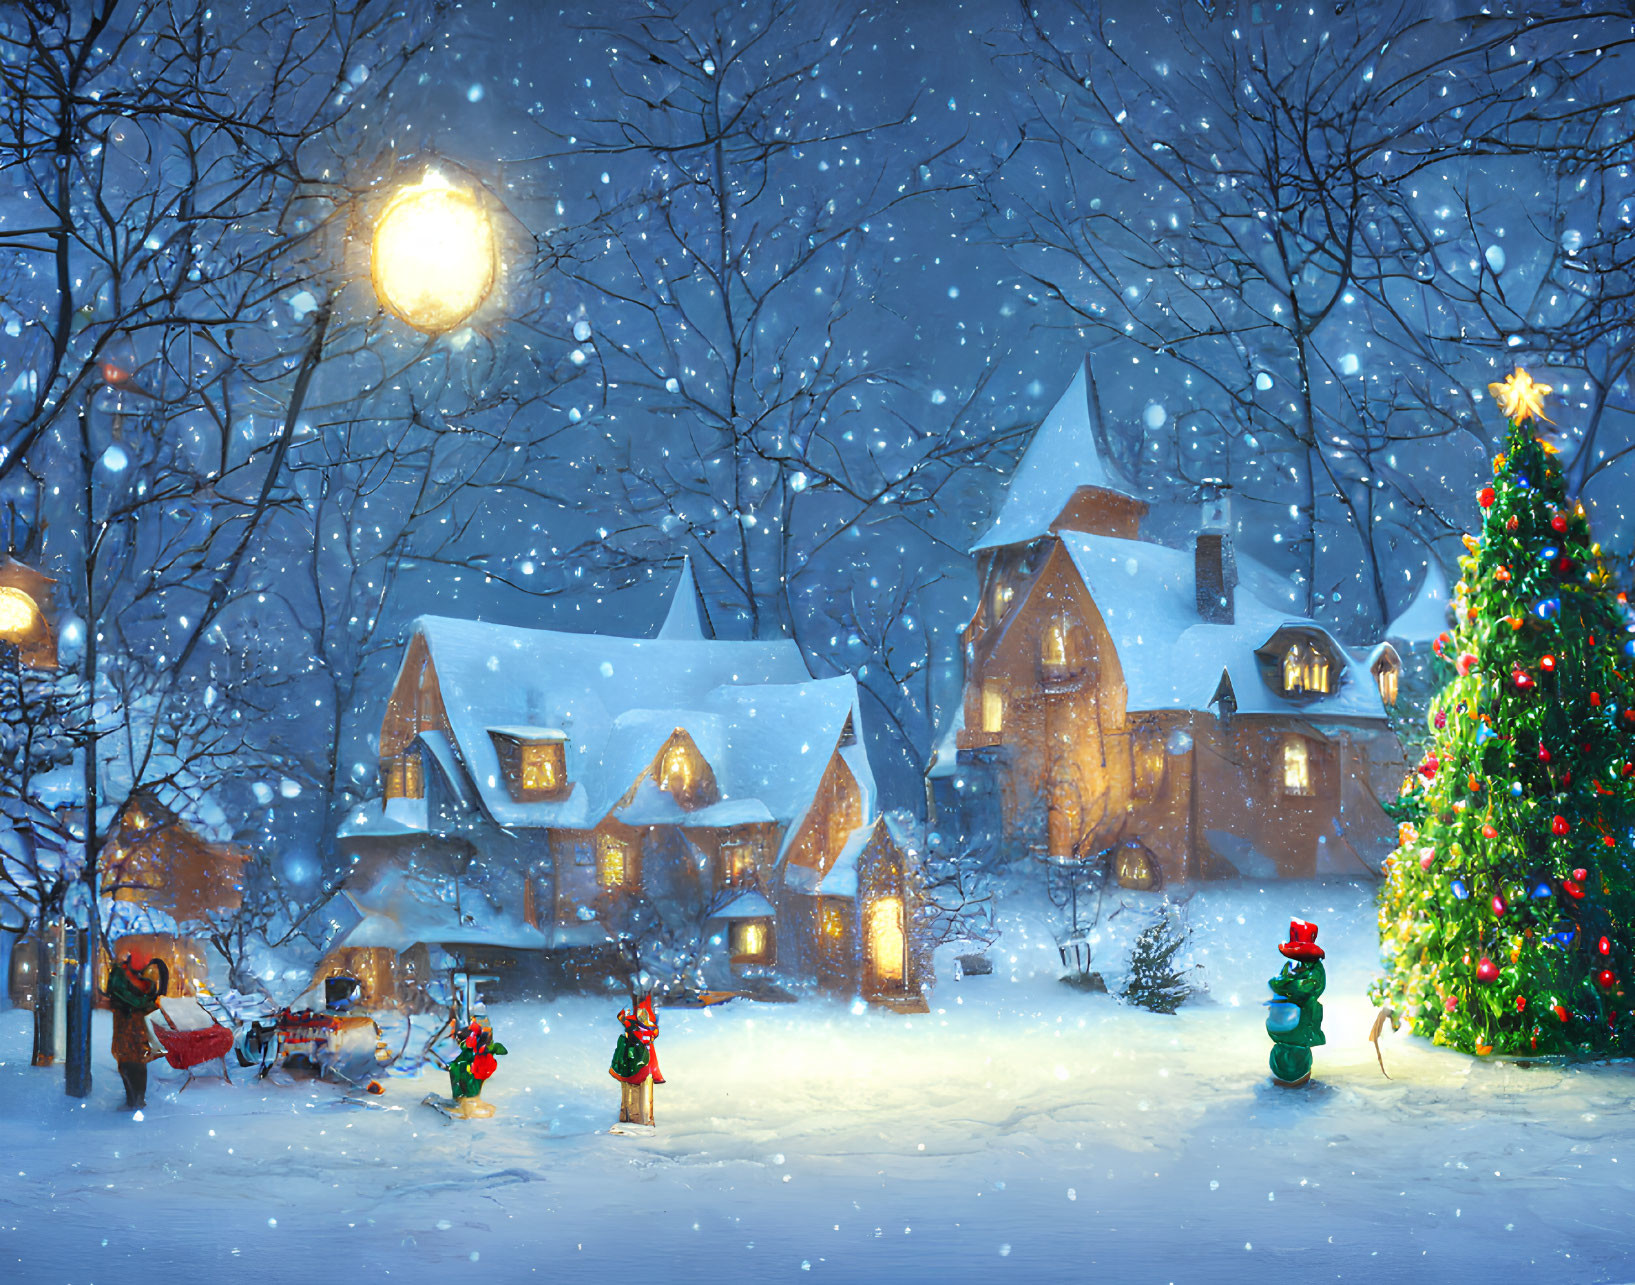 Snowy village scene: illuminated houses, Christmas tree, snowman, festive atmosphere